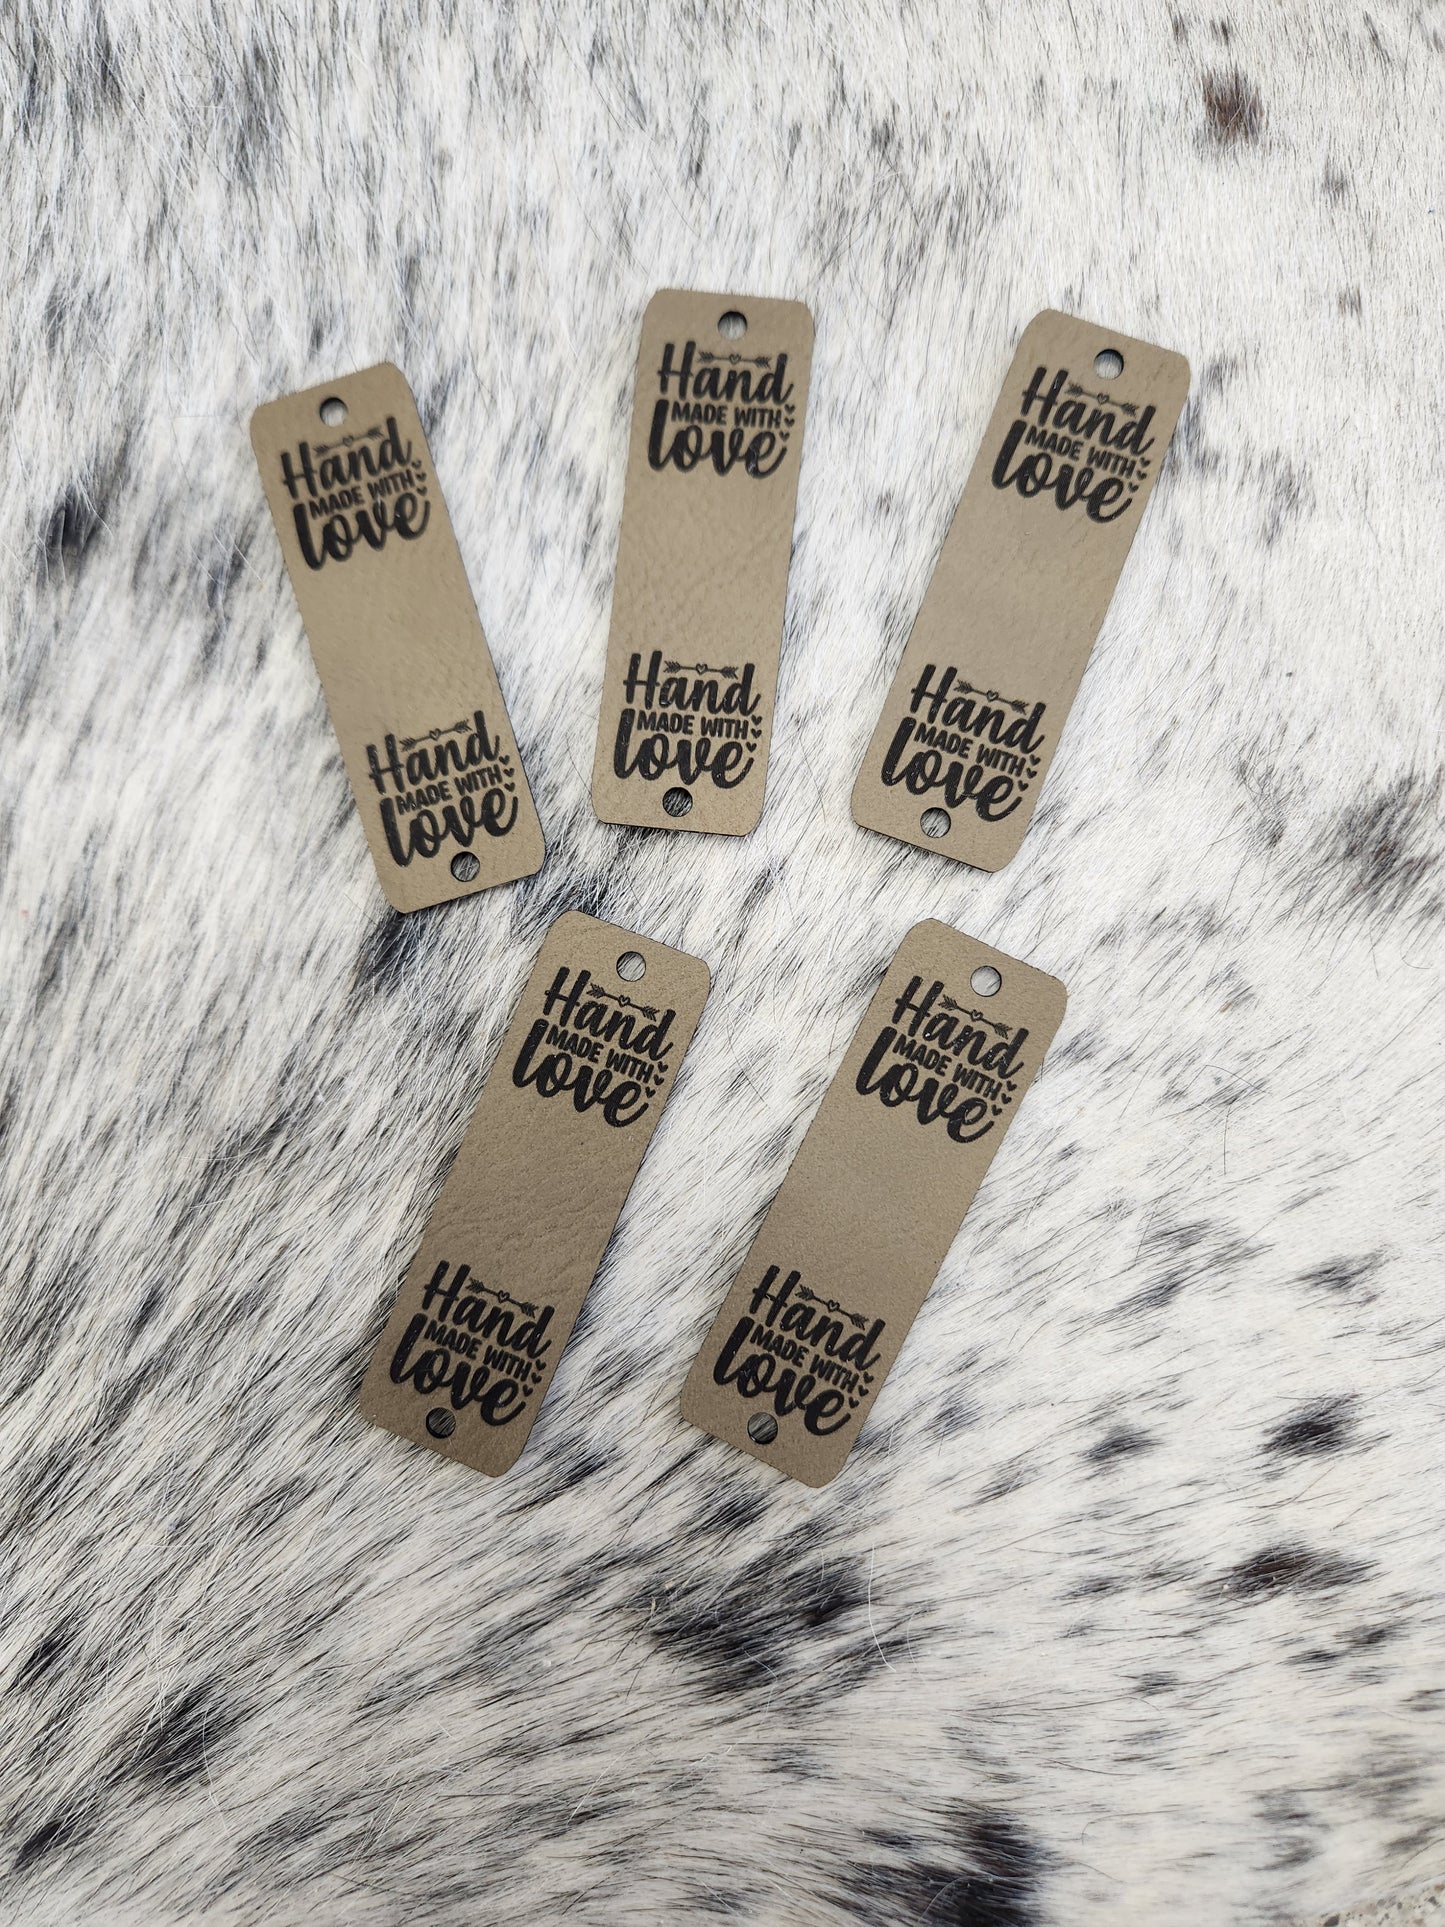 Handmade with love tags